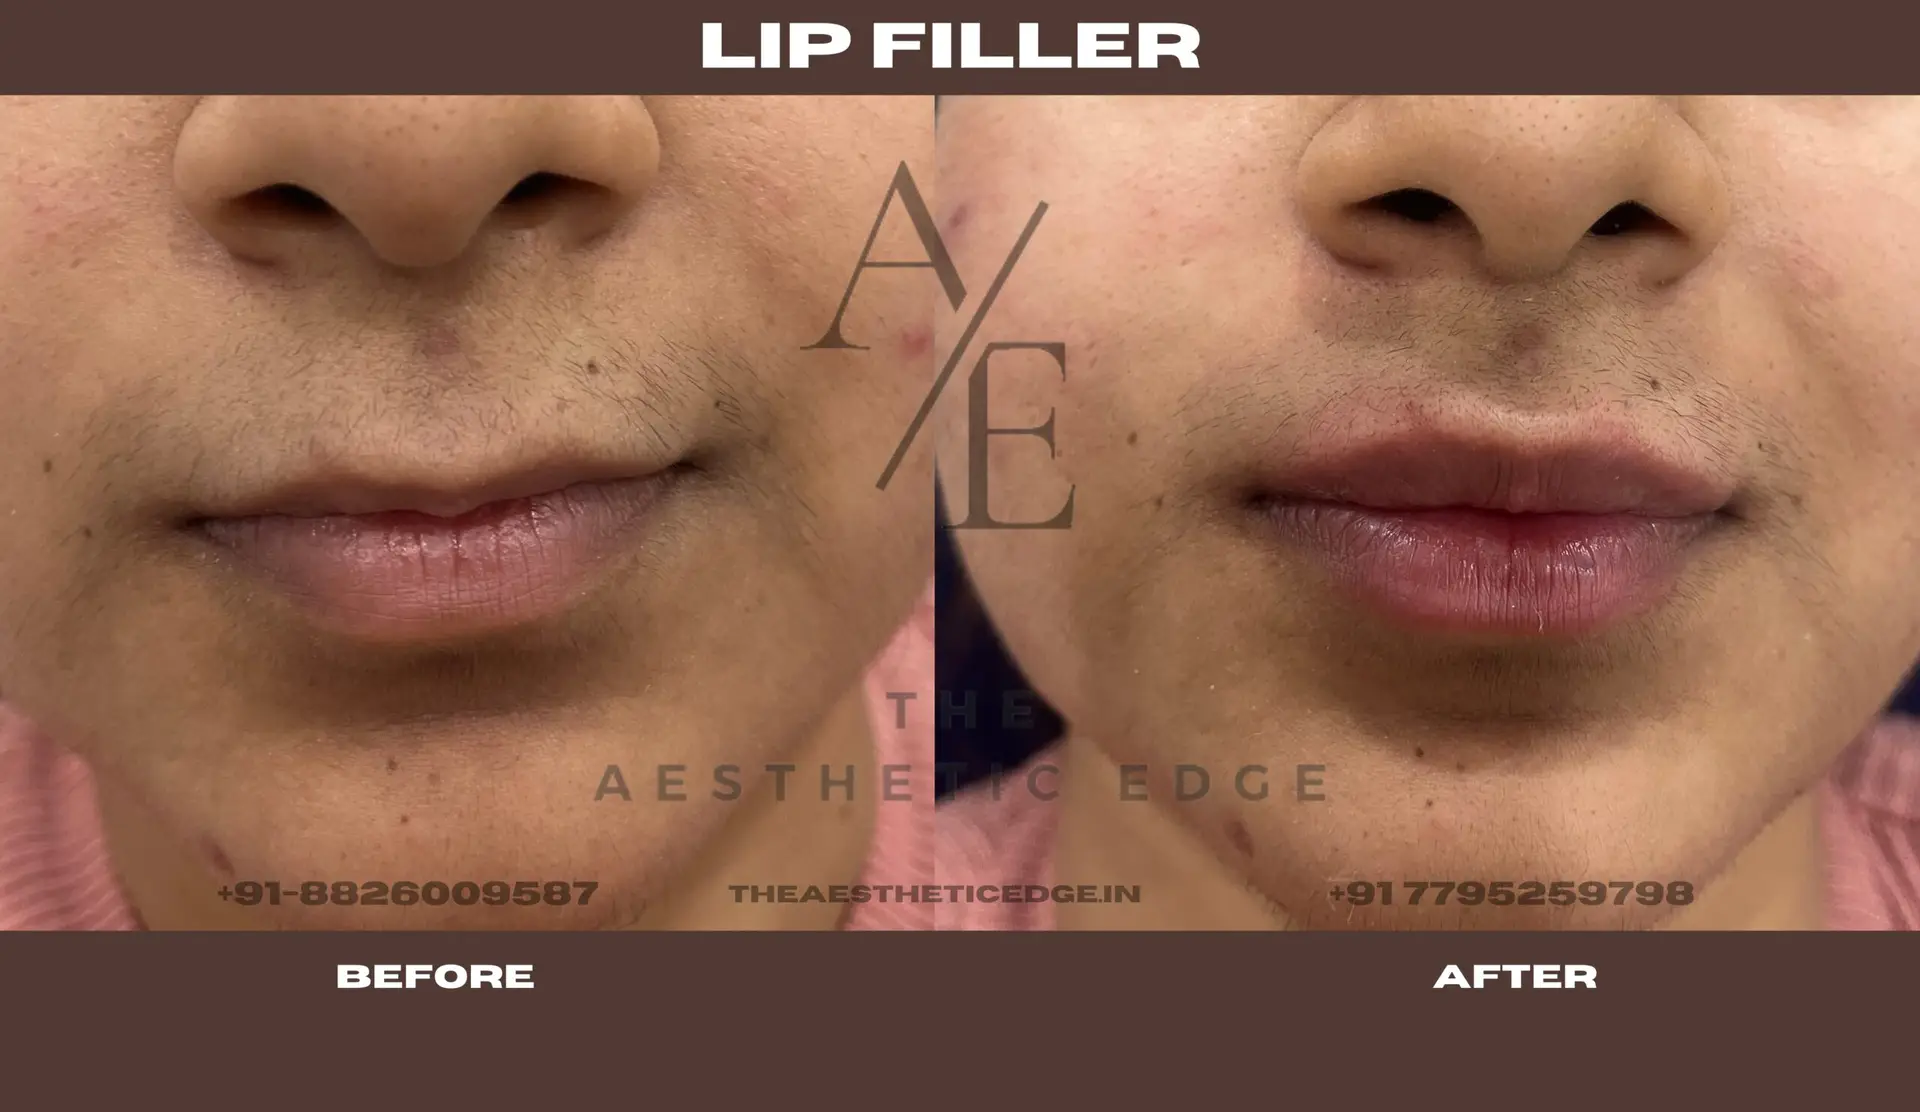 Lip filler results